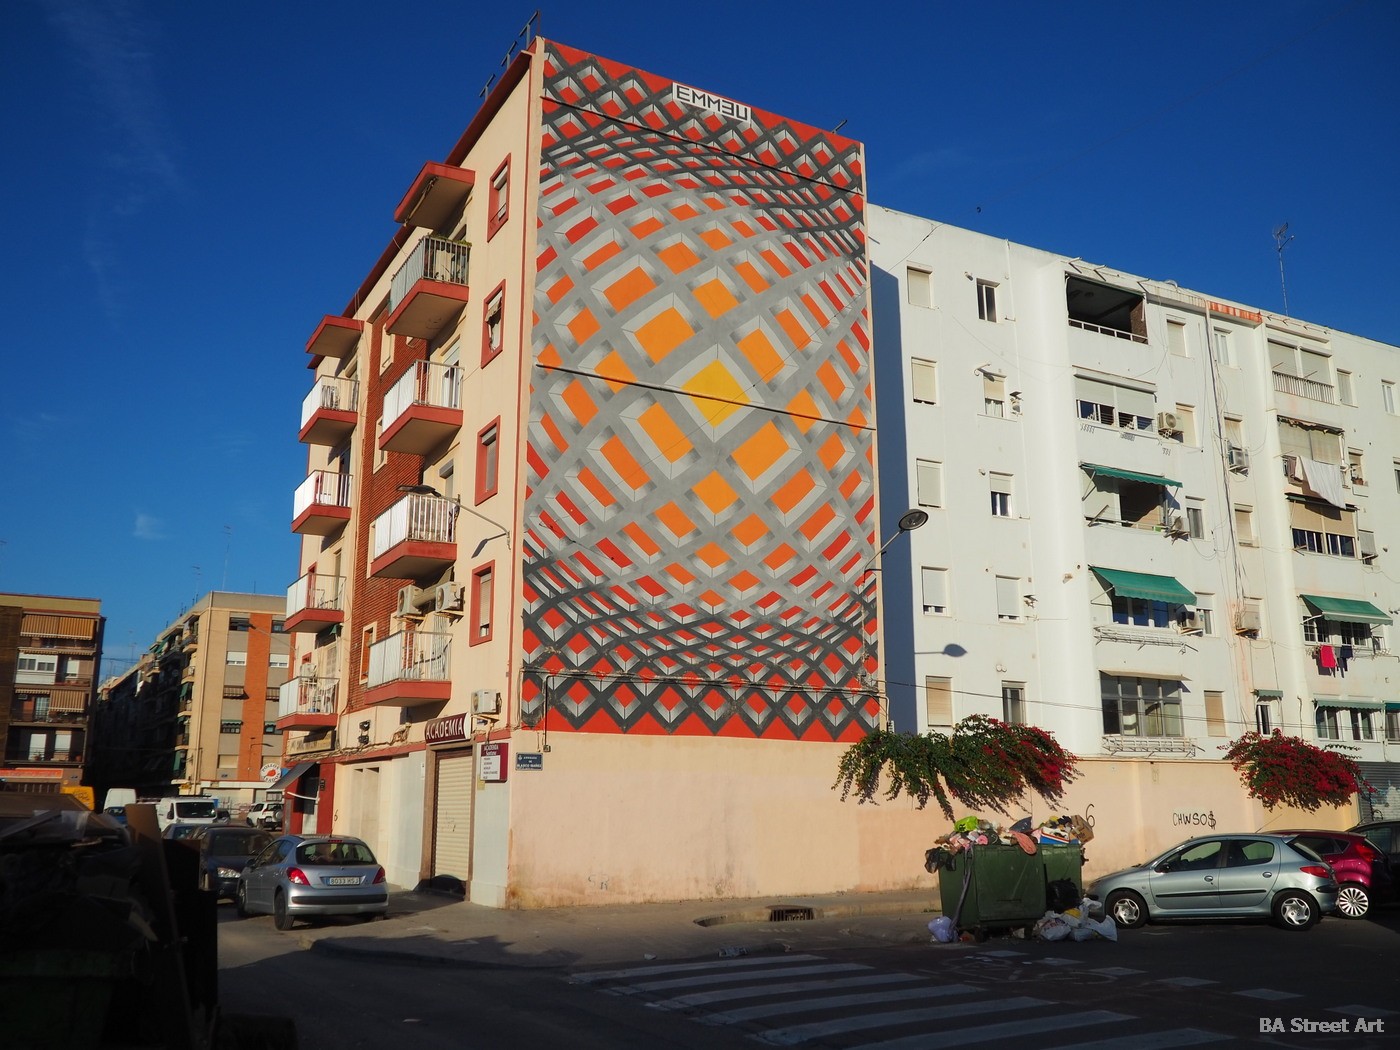 emmeu artist italy italiano mural valencia cabanyal españa spain arte callejero geometria buenosairesstreetart.com